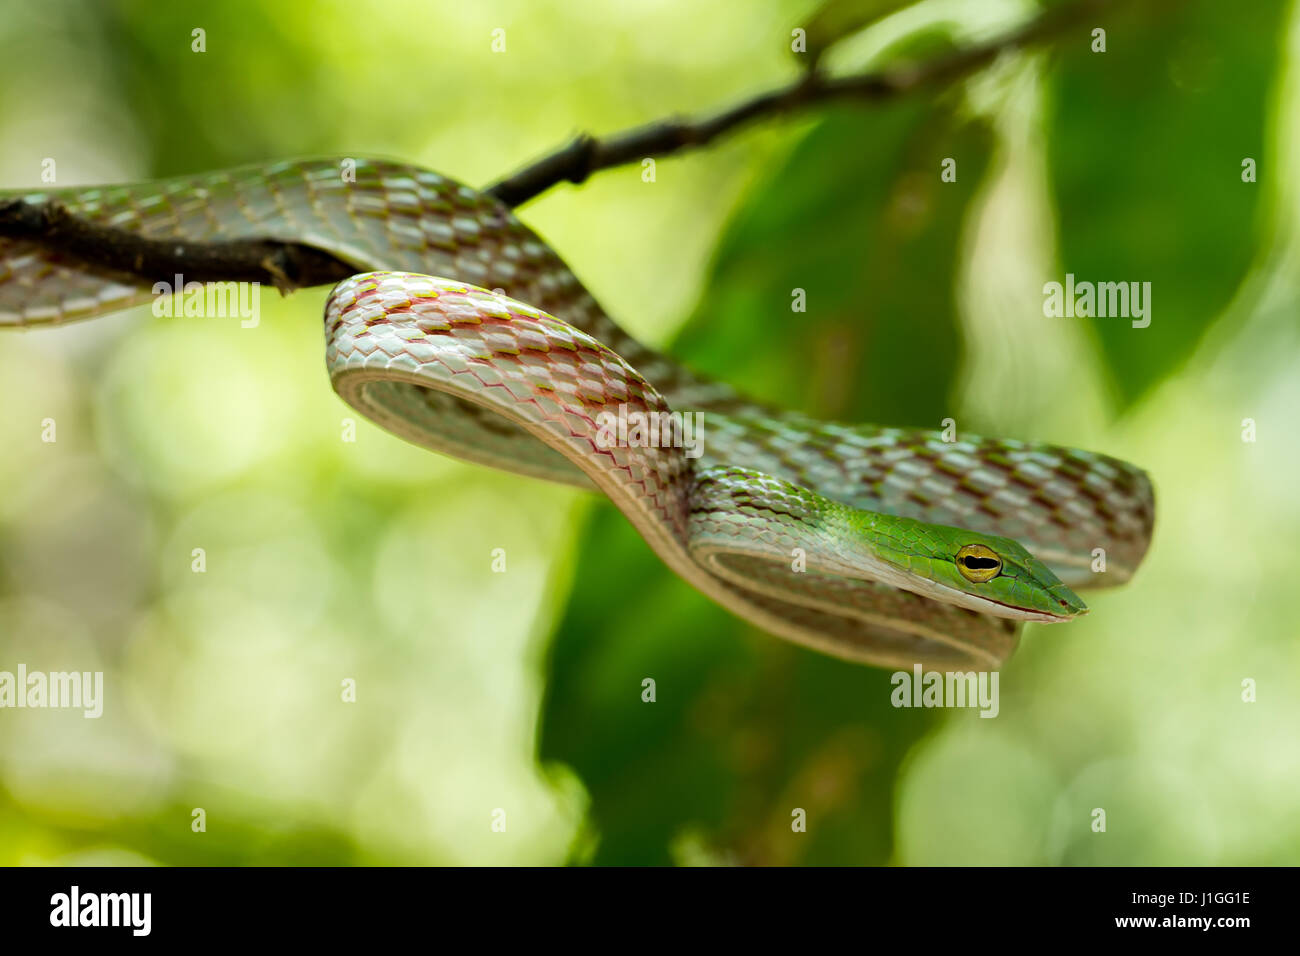 Whipsnake Oriental, asiatique Vine green Snake (Ahaetulla prasina) Tangkoko dans la réserve naturelle de la faune du nord de Sulawesi, Indonésie Banque D'Images